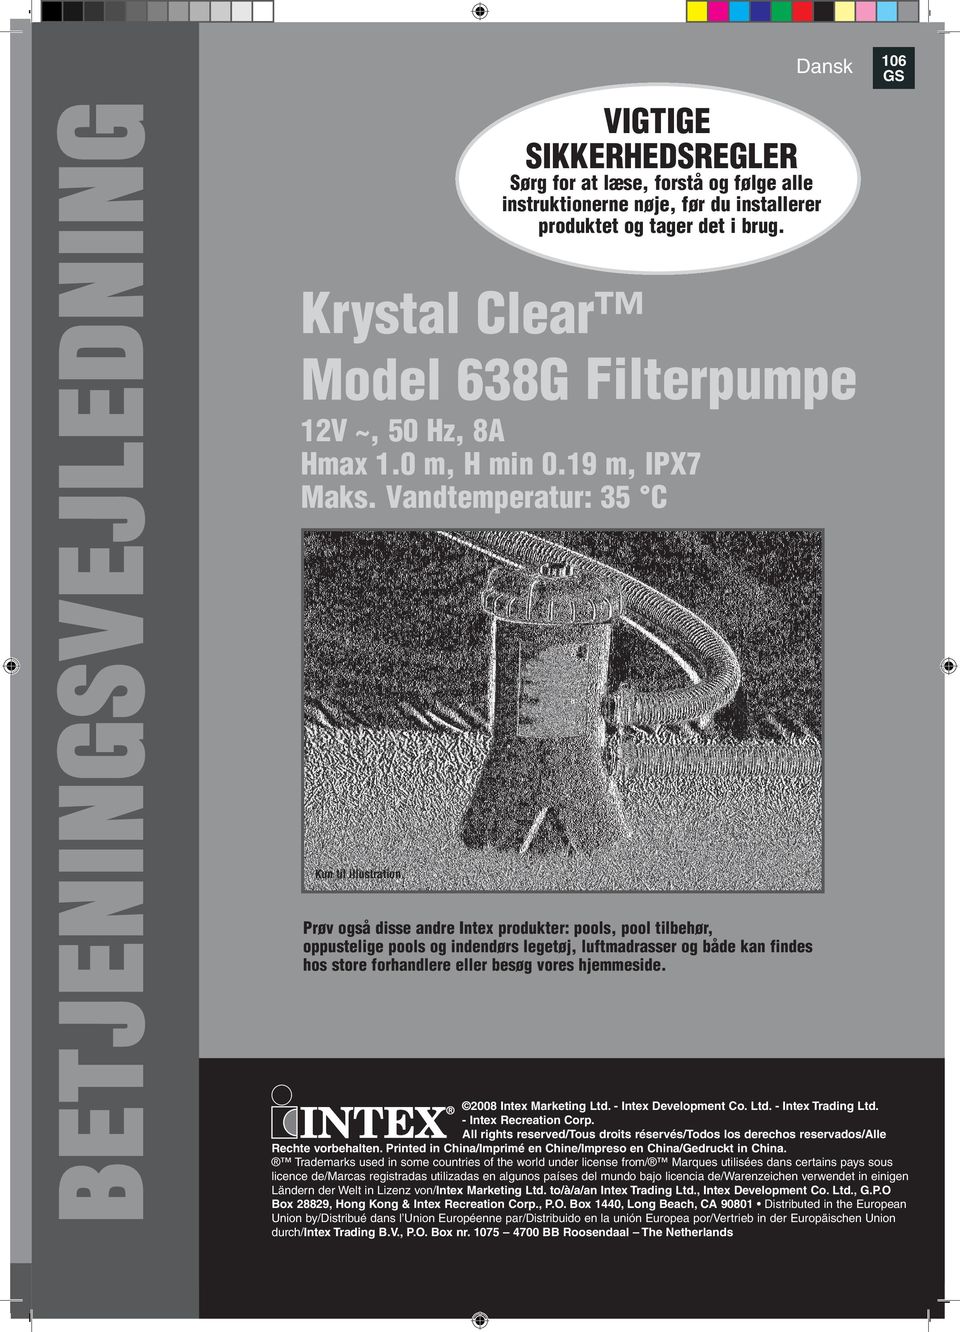 Krystal Clear Model 38G Filterpumpe 2V ~, 50 Hz, 8A Hmax.0 m, H min 0.9 m, IPX7 Maks. Vandtemperatur: 35 C Kun til illustration.